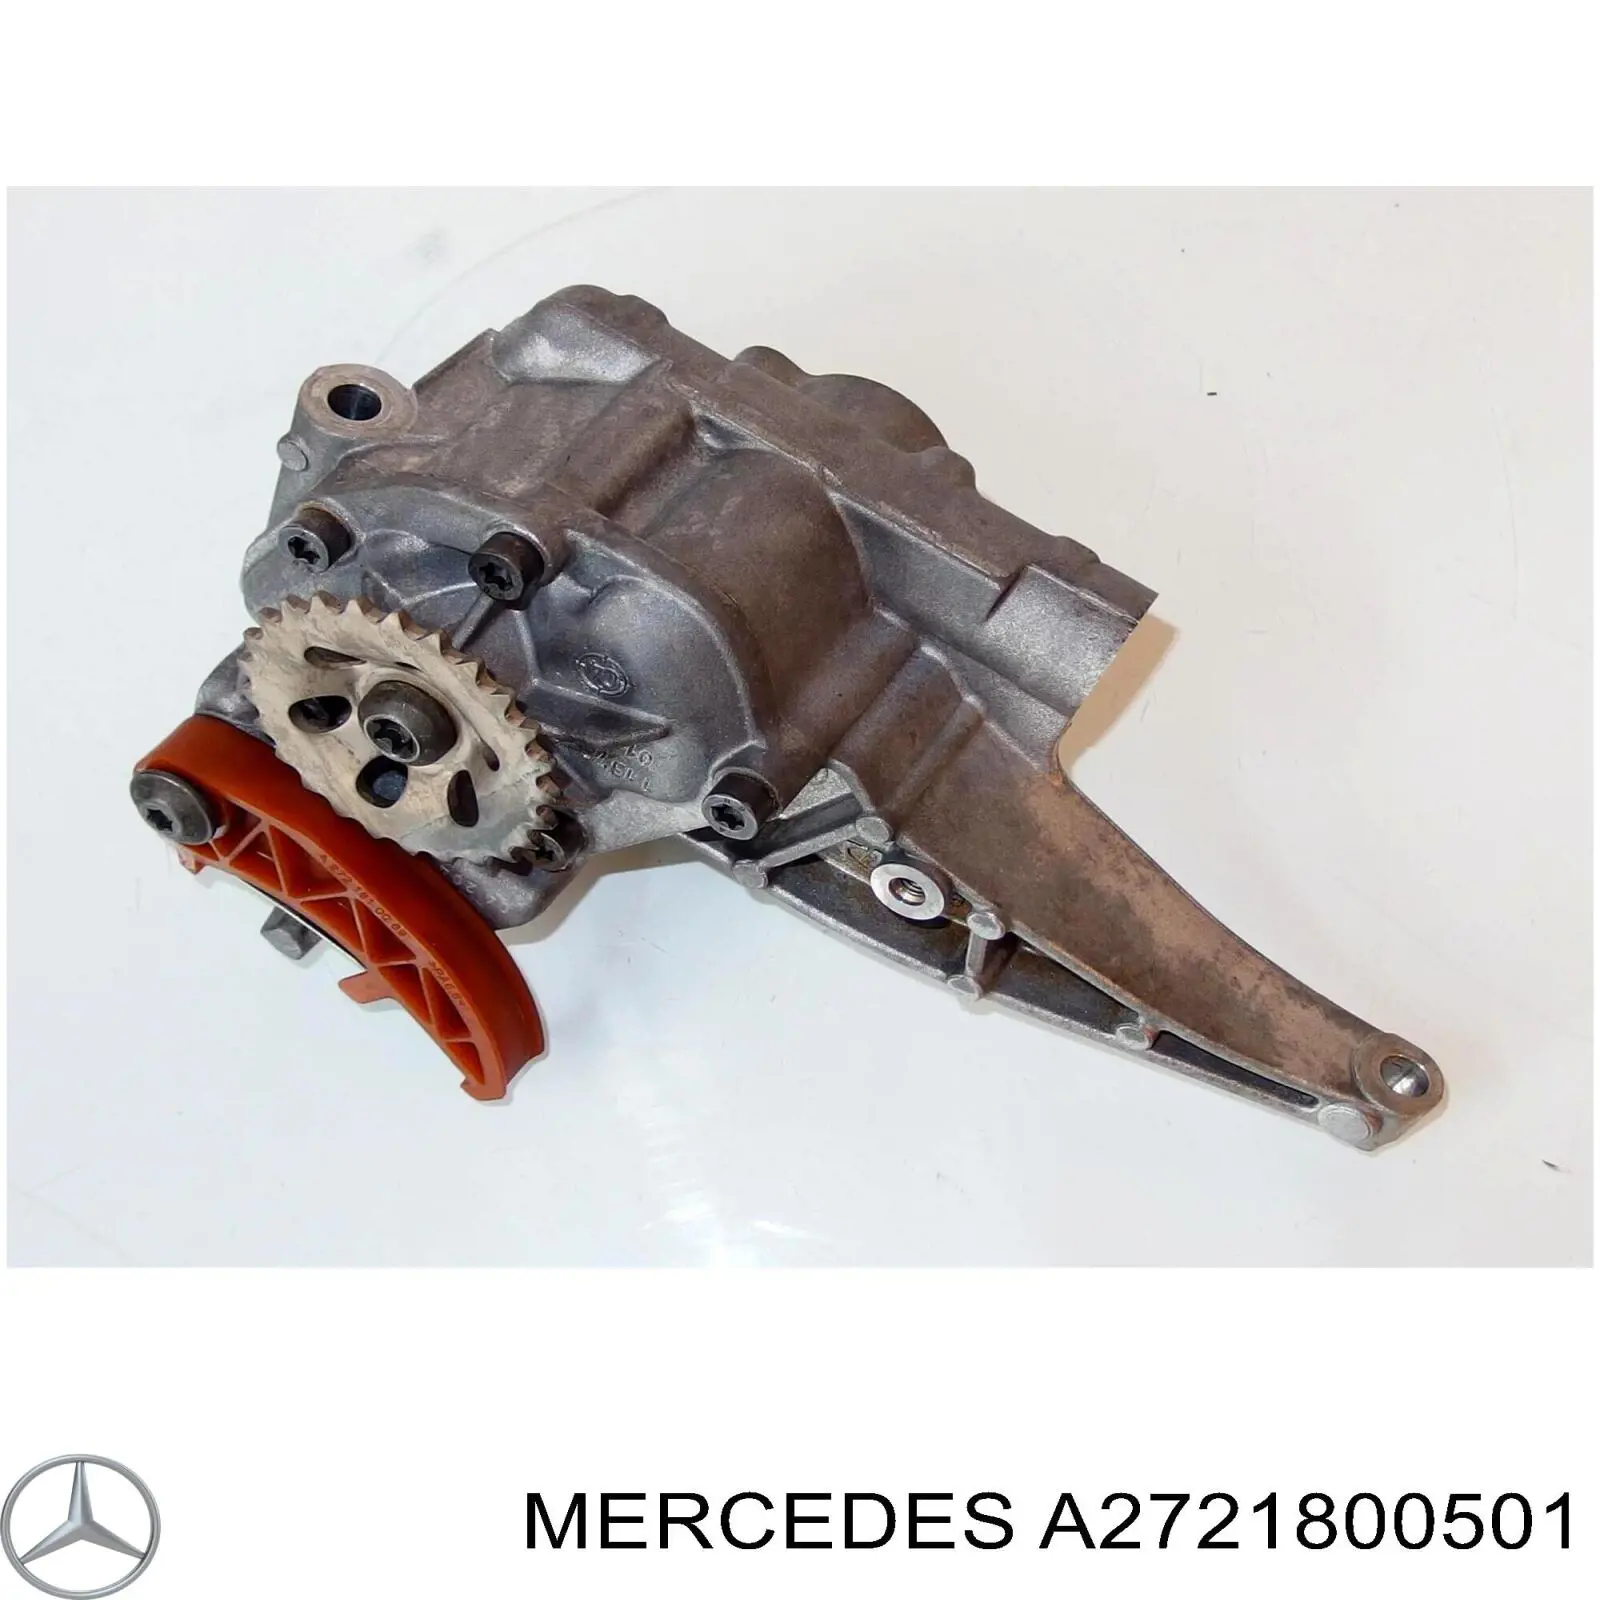 A2721800501 Mercedes 